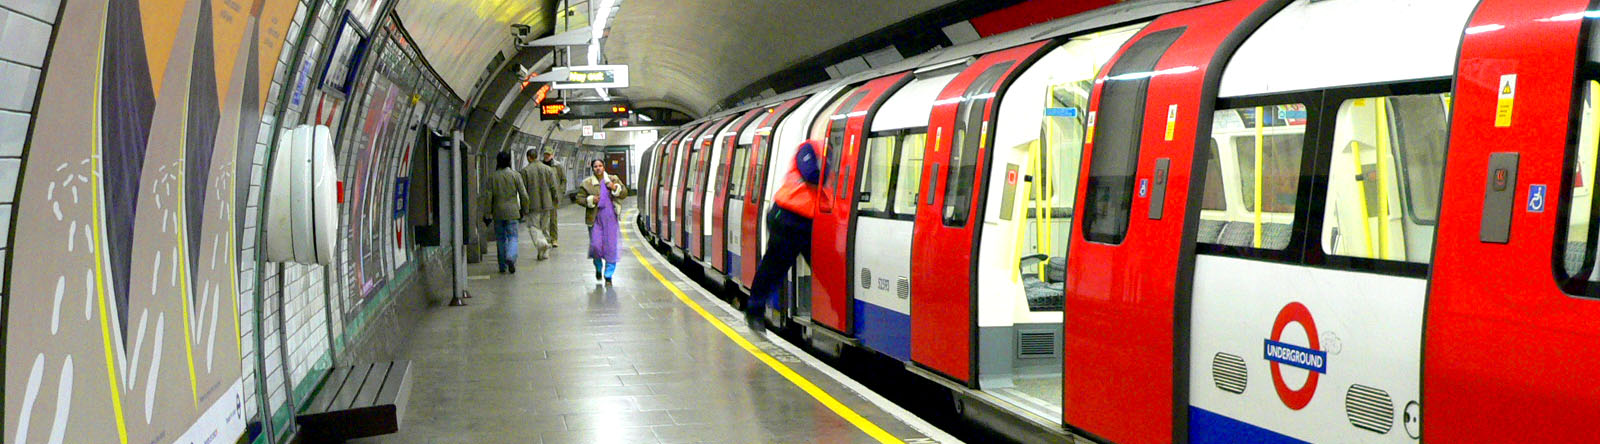 Transporte em Londres - Metro (Underground)